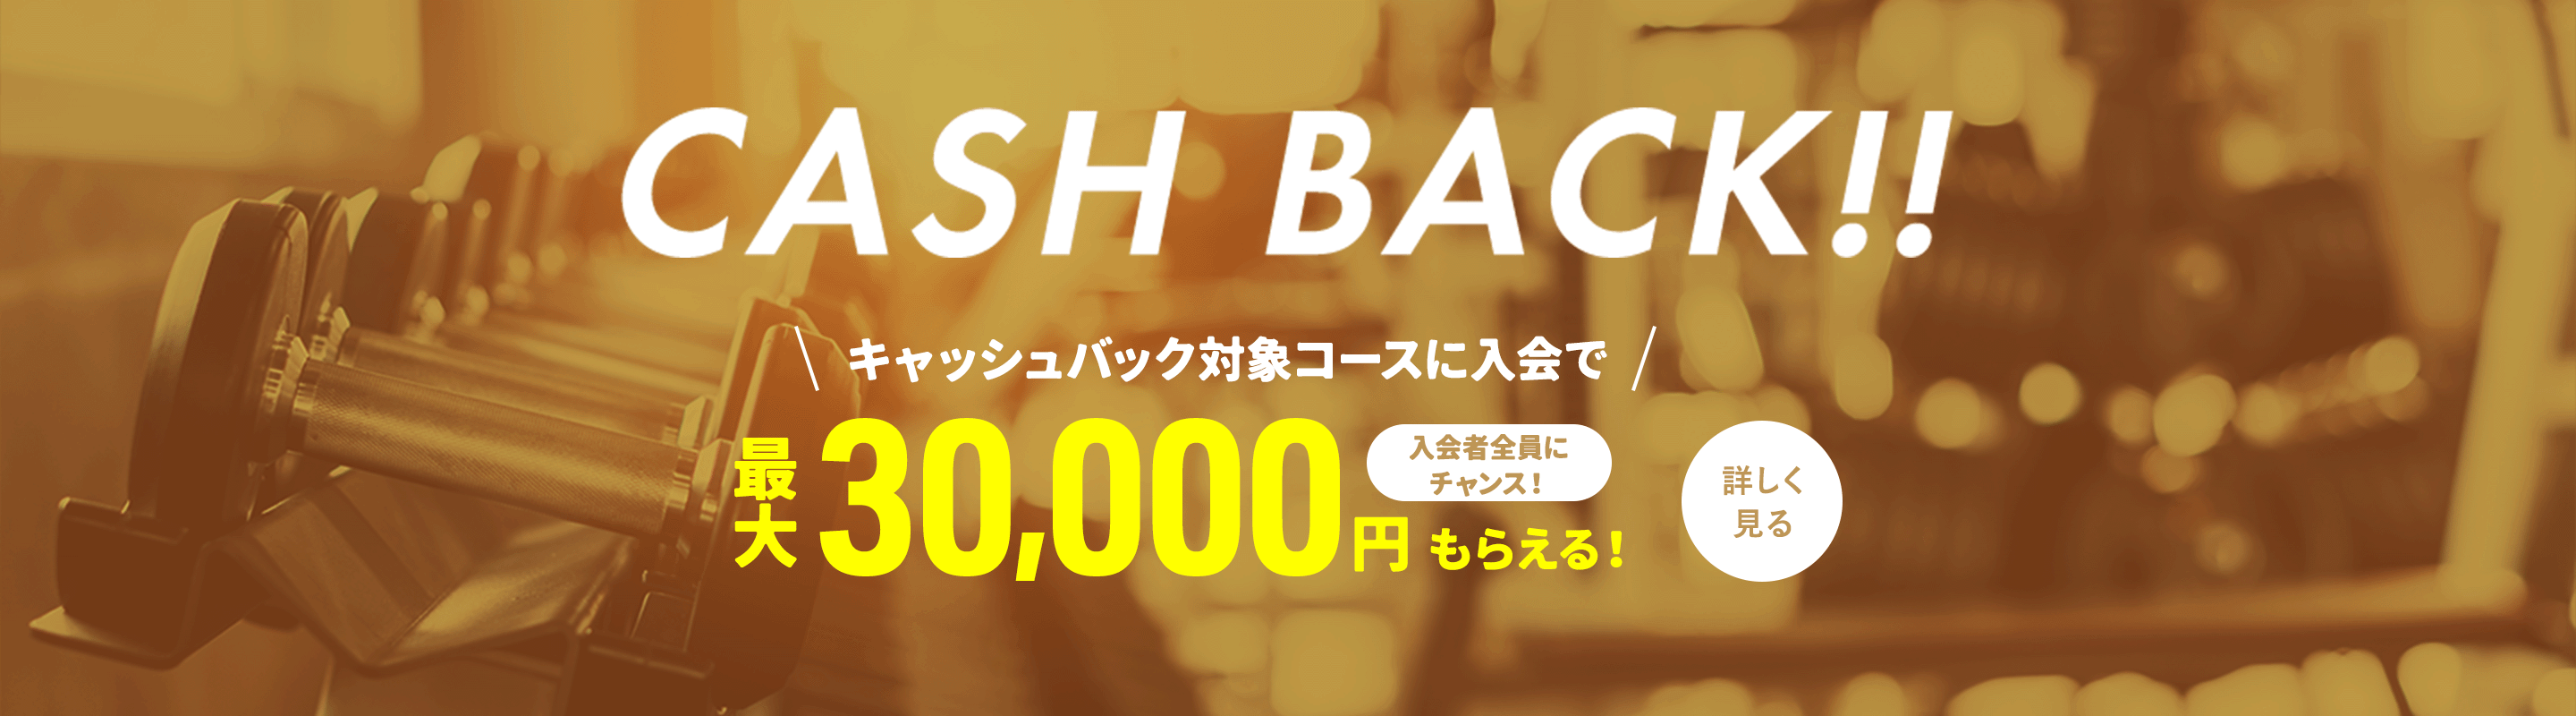 CASH BACK!! キャッシュバック対象コースに入会で入会者全員に85,000円もらえる! 詳しく見る